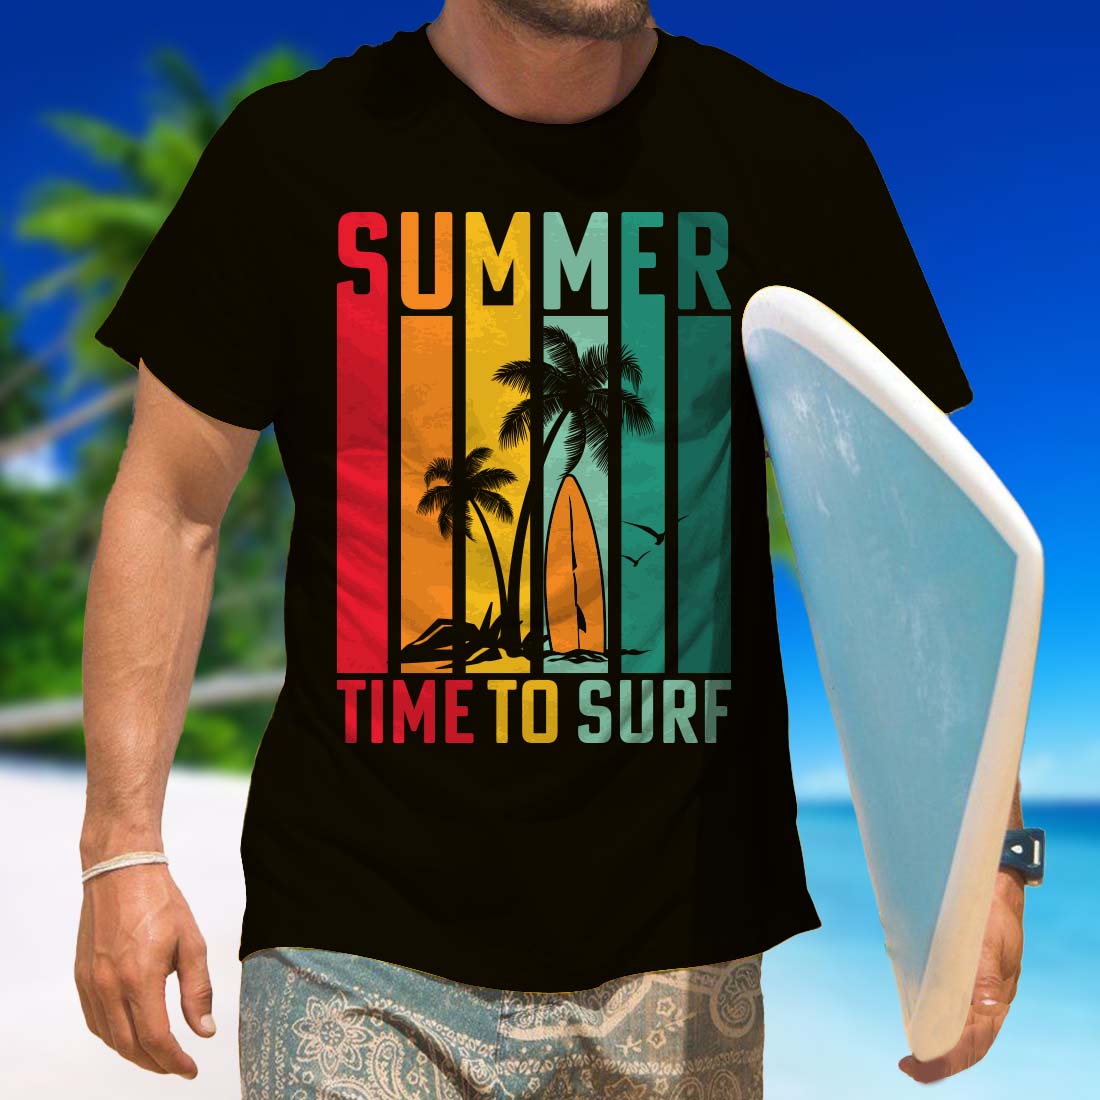 surfing t shirt 6 594